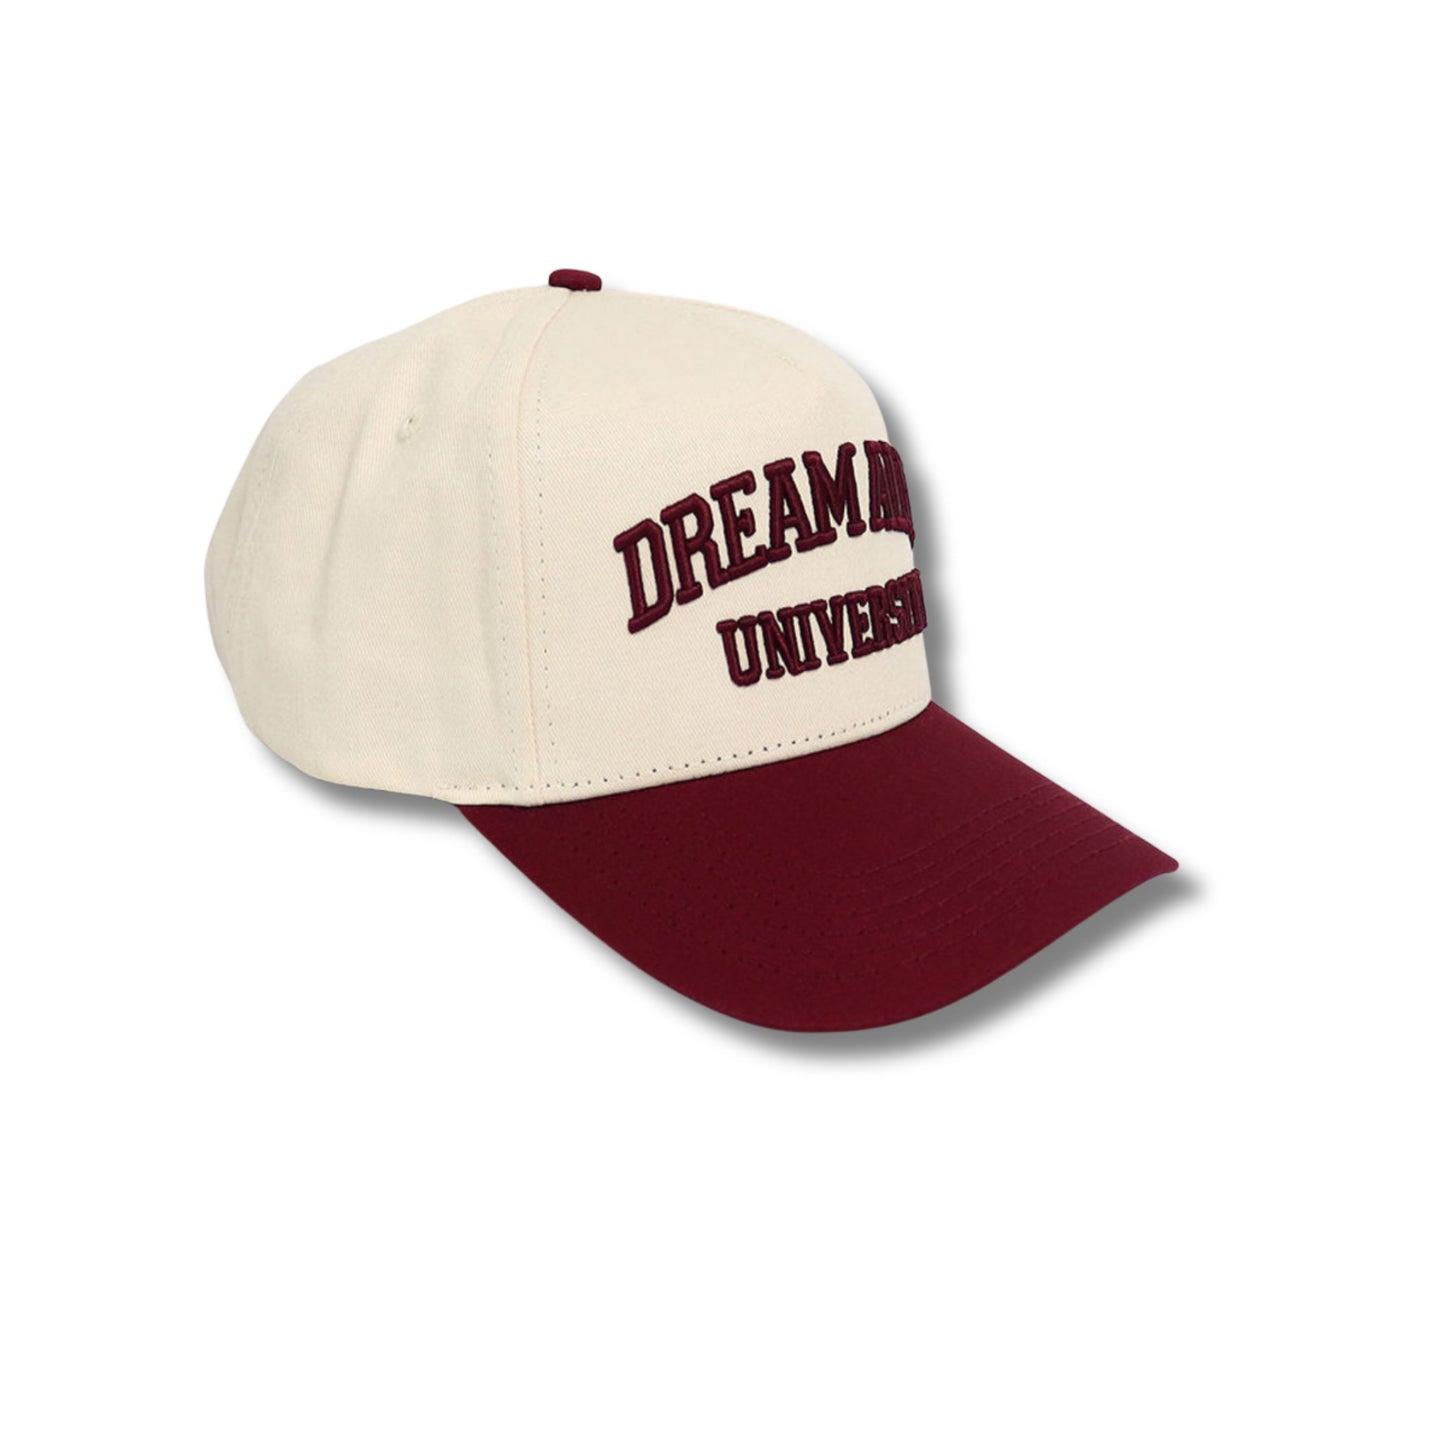 University Strapback (Cream & Maroon)